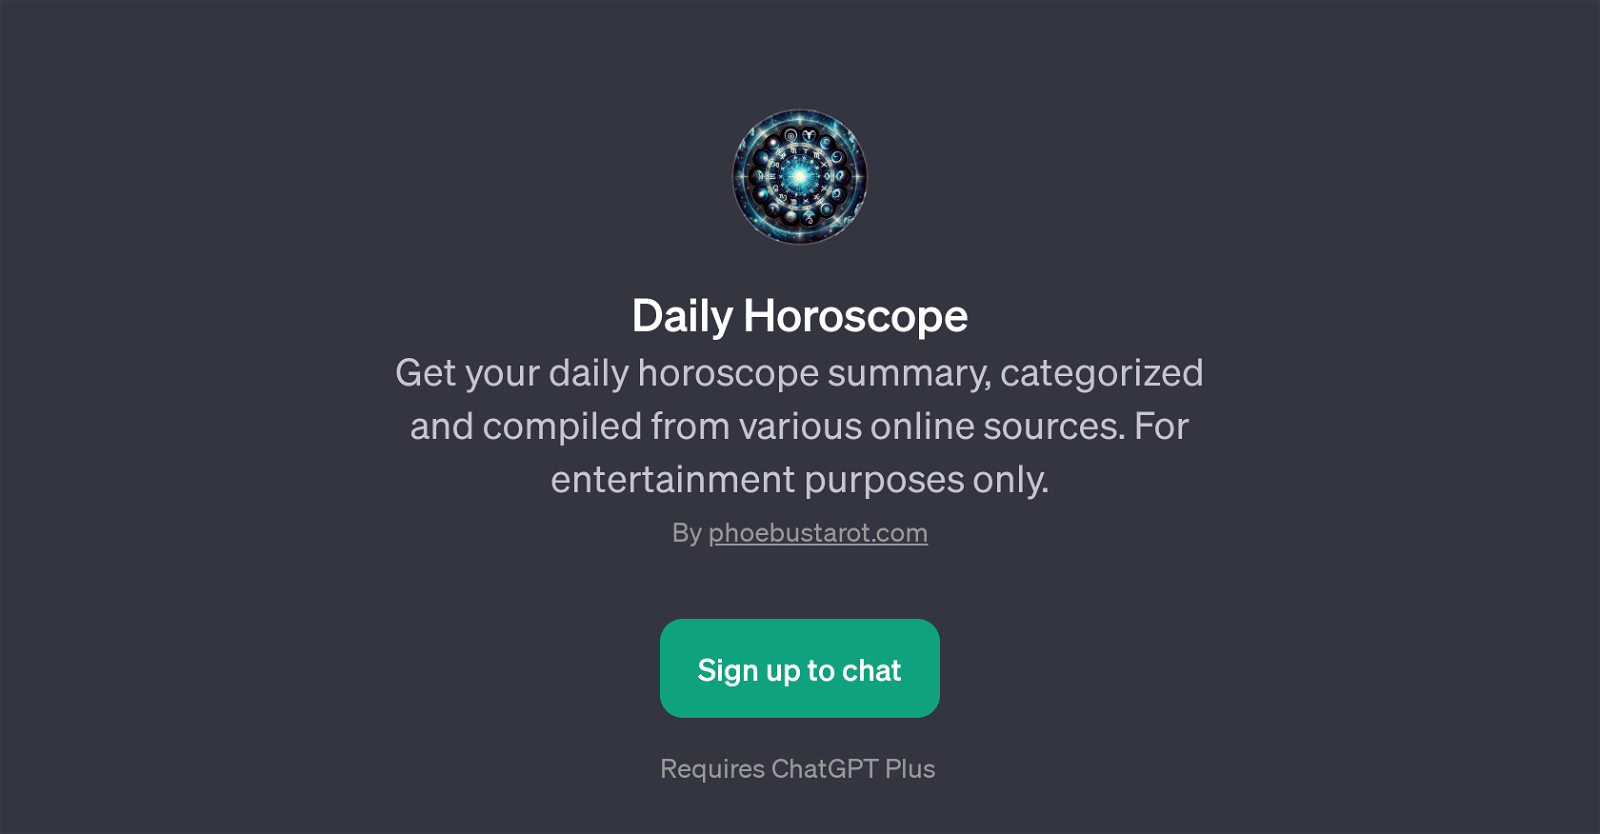 Daily Horoscope website